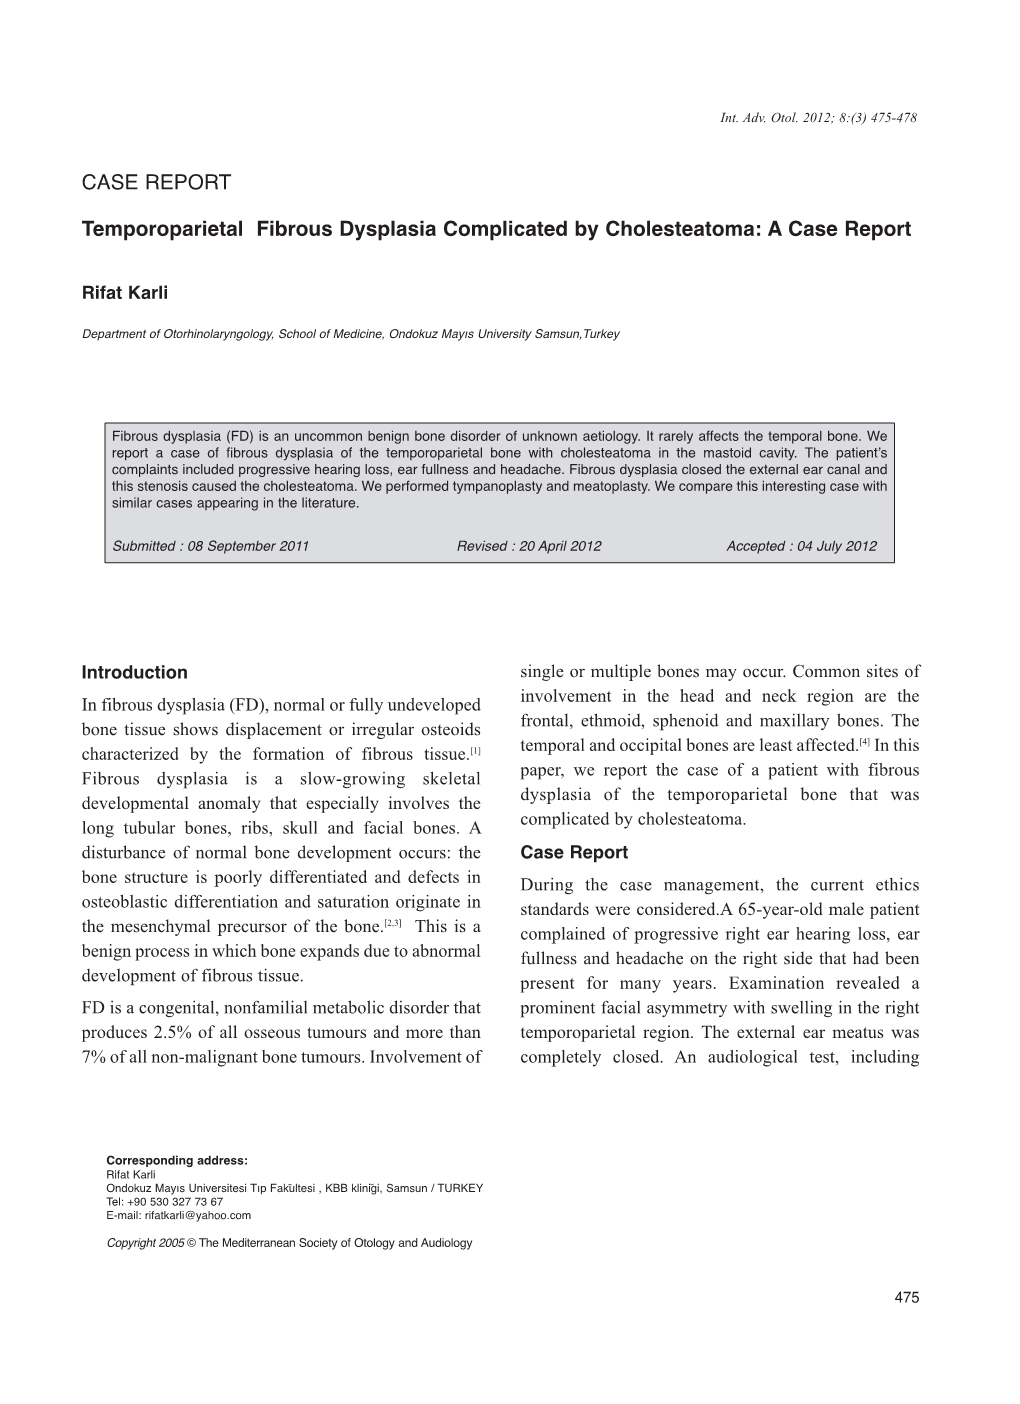 CASE REPORT Temporoparietal Fibrous Dysplasia Complicated By